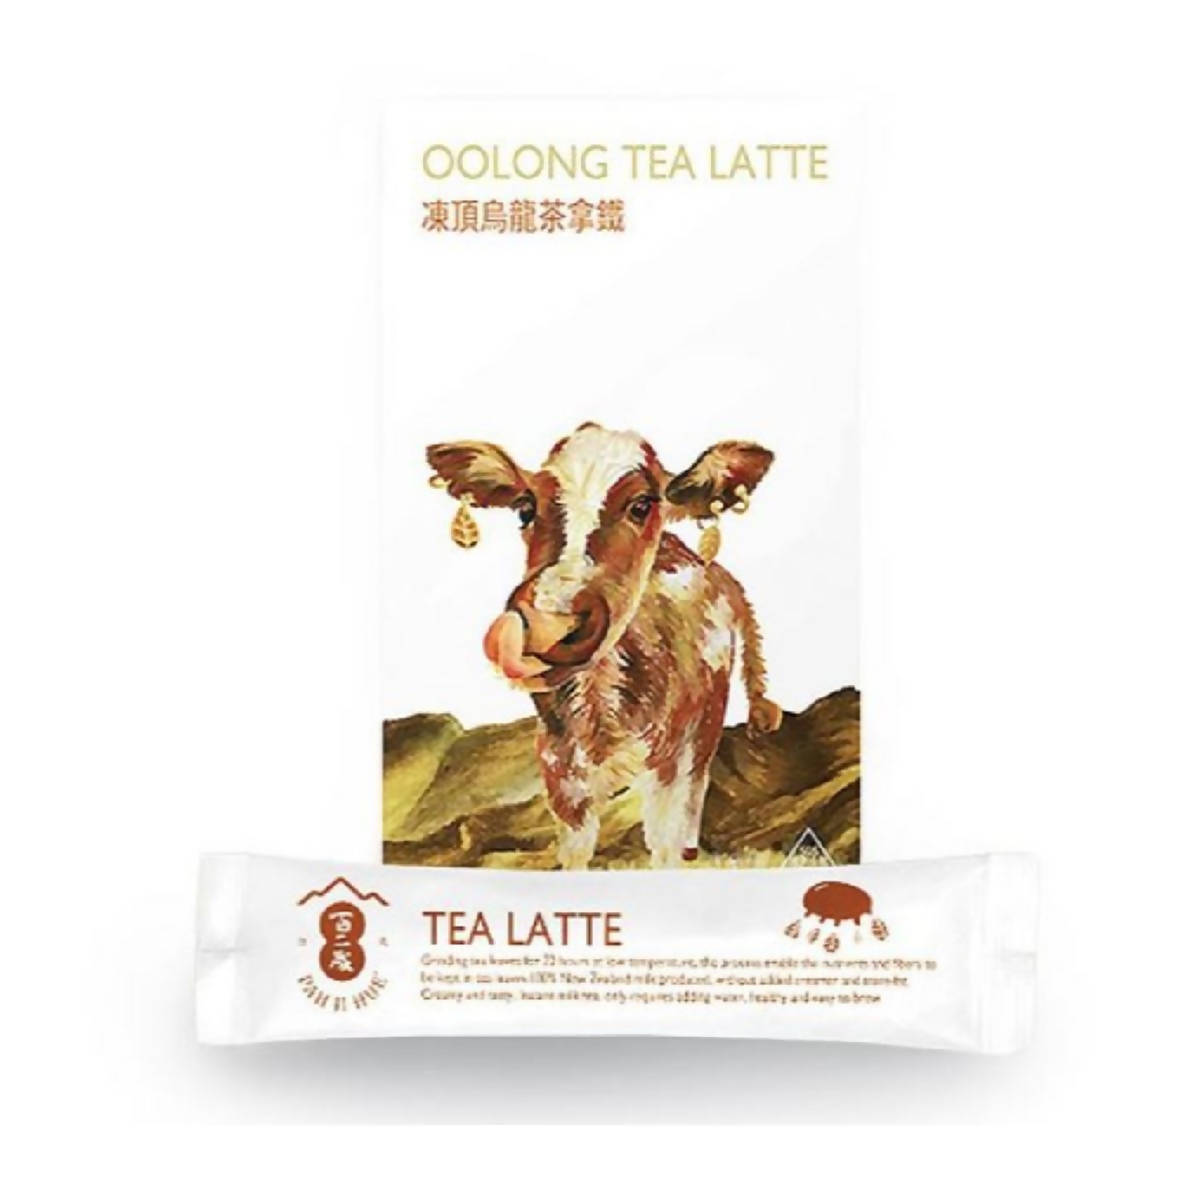 Taiwan Direct Mail 【12 Years Old】 EATEA 120 Oolong Tea Latte 220g 8pcs 